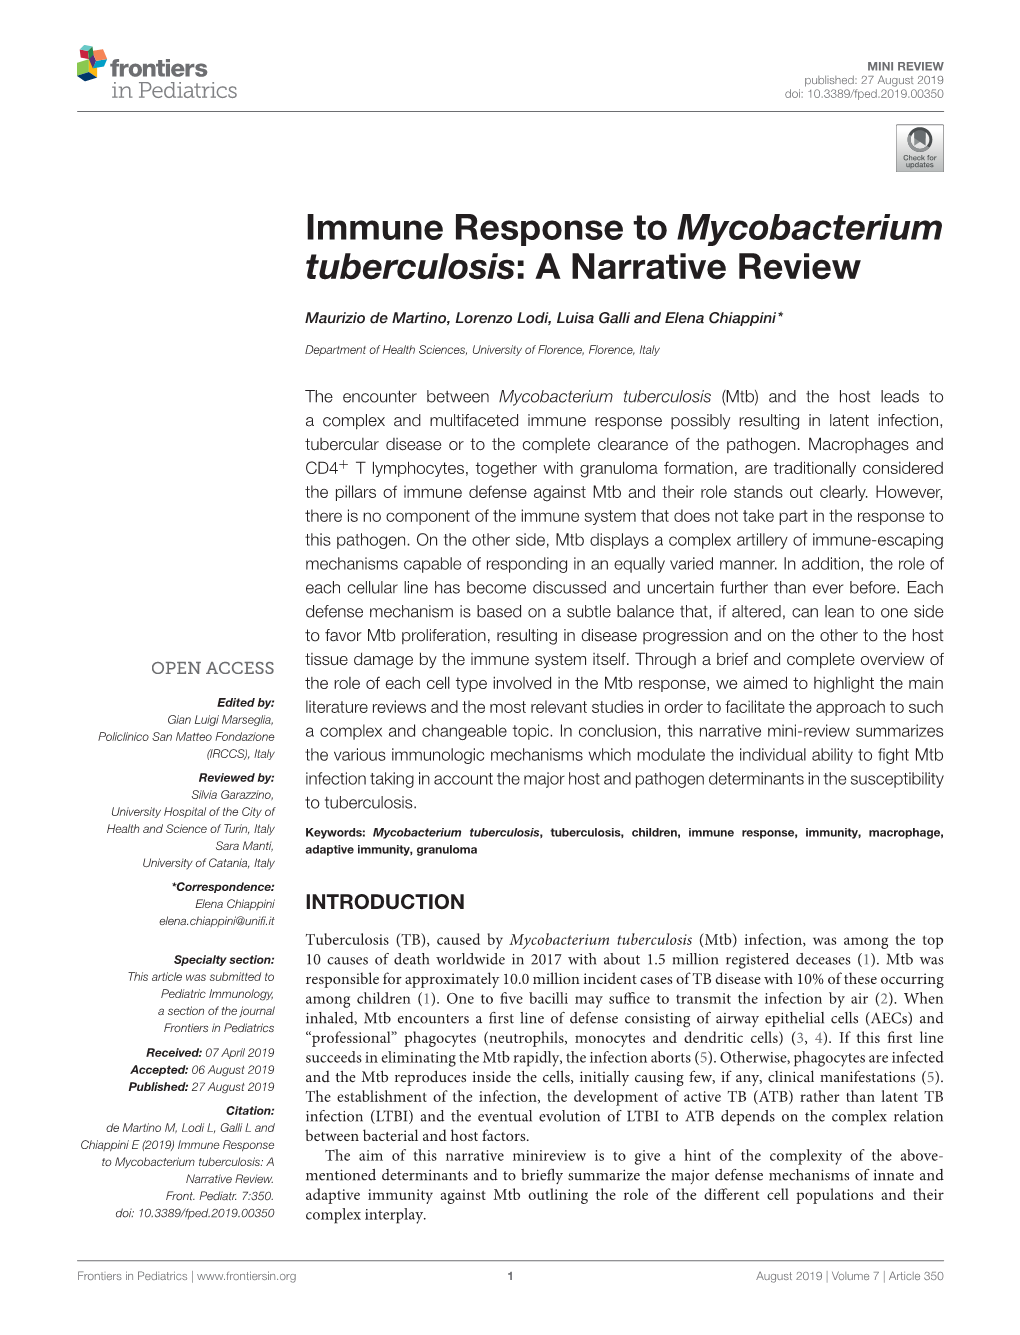 Immune Response to Mycobacterium Tuberculosis: a Narrative Review